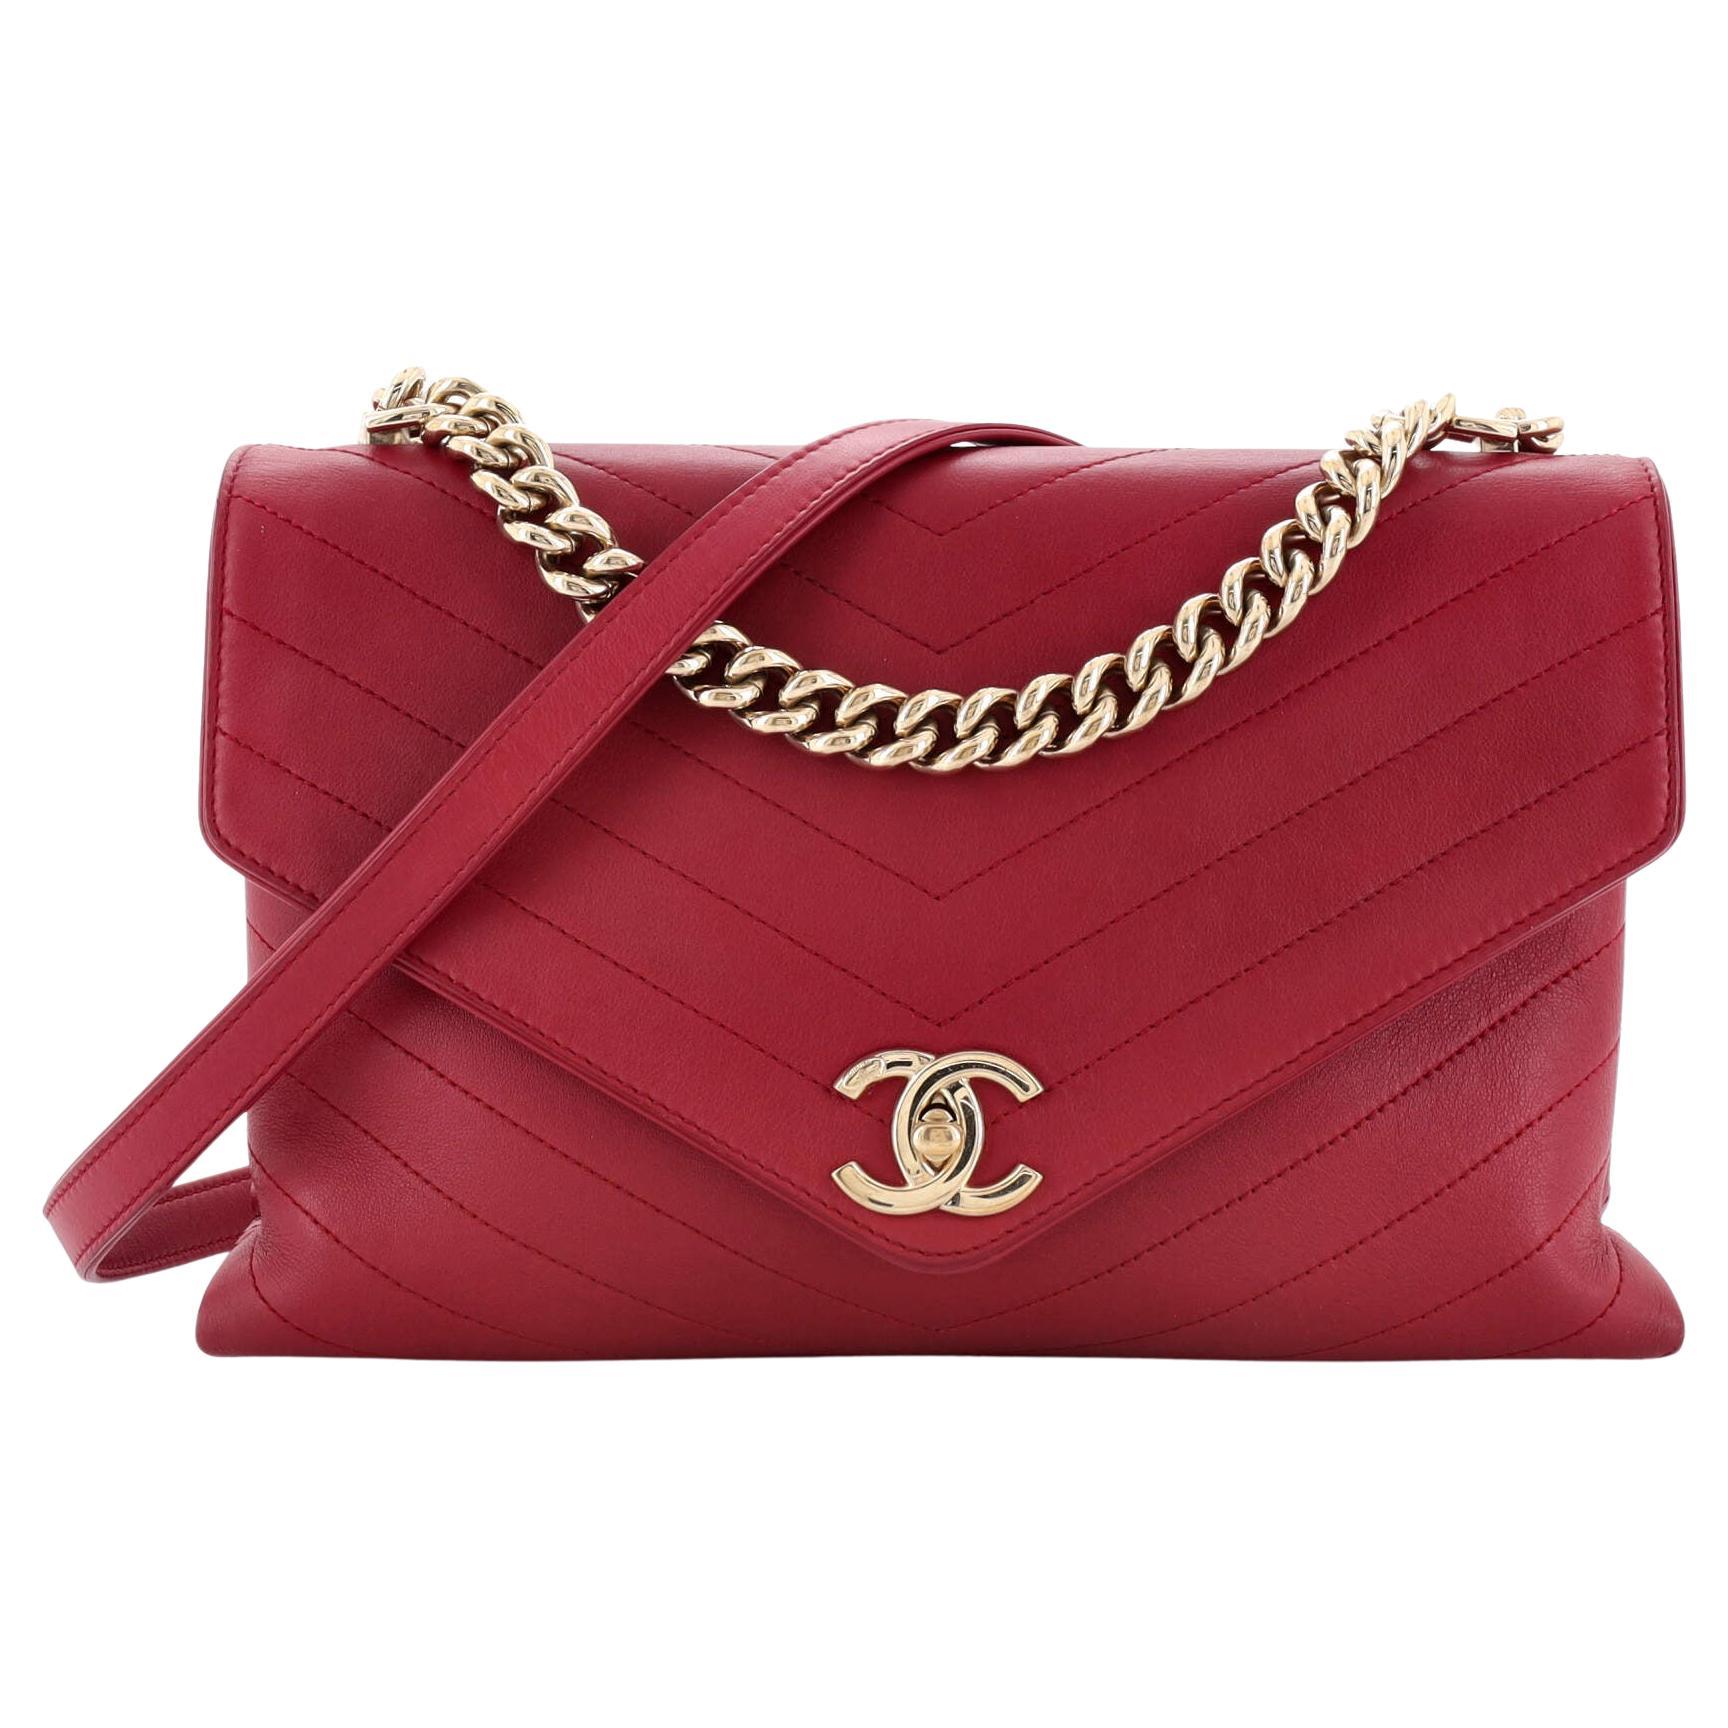 Chanel Coco Chevron Flap Bag Stitched Calfskin Medium